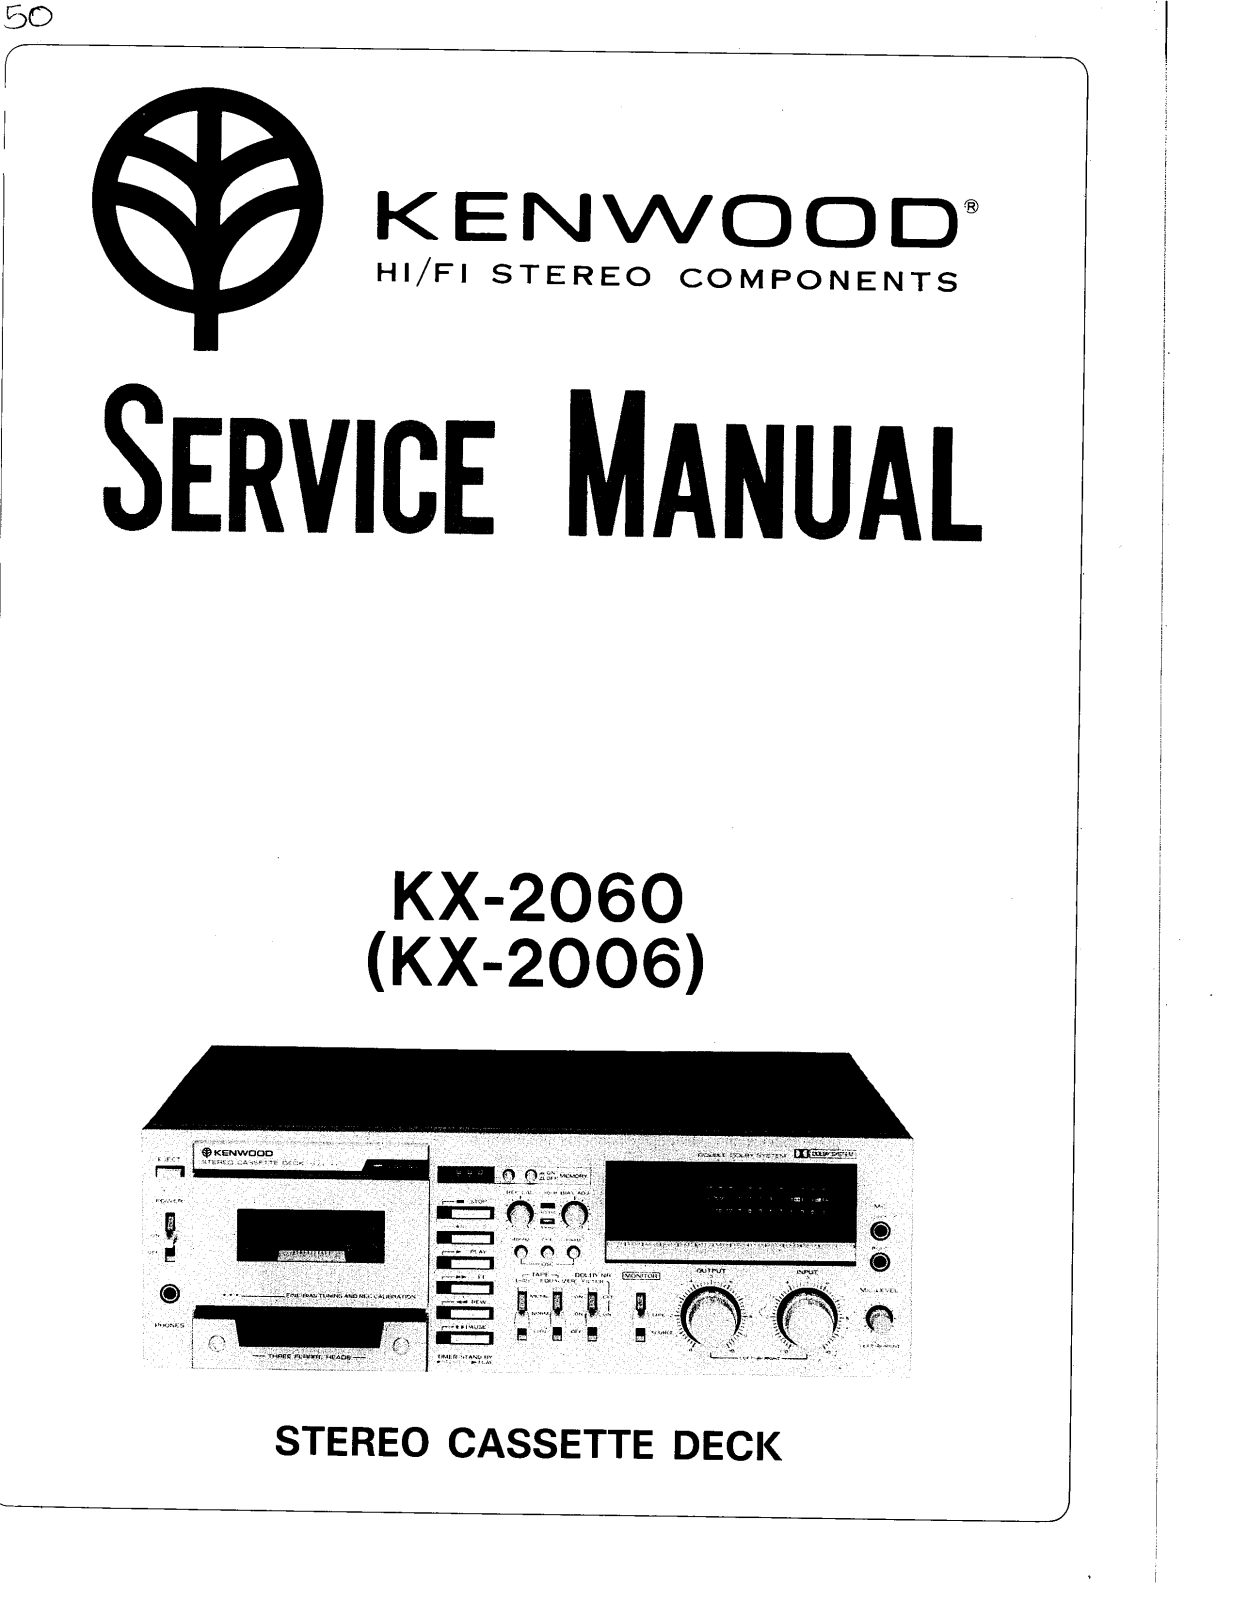 Kenwood kx-2060 Service Manual